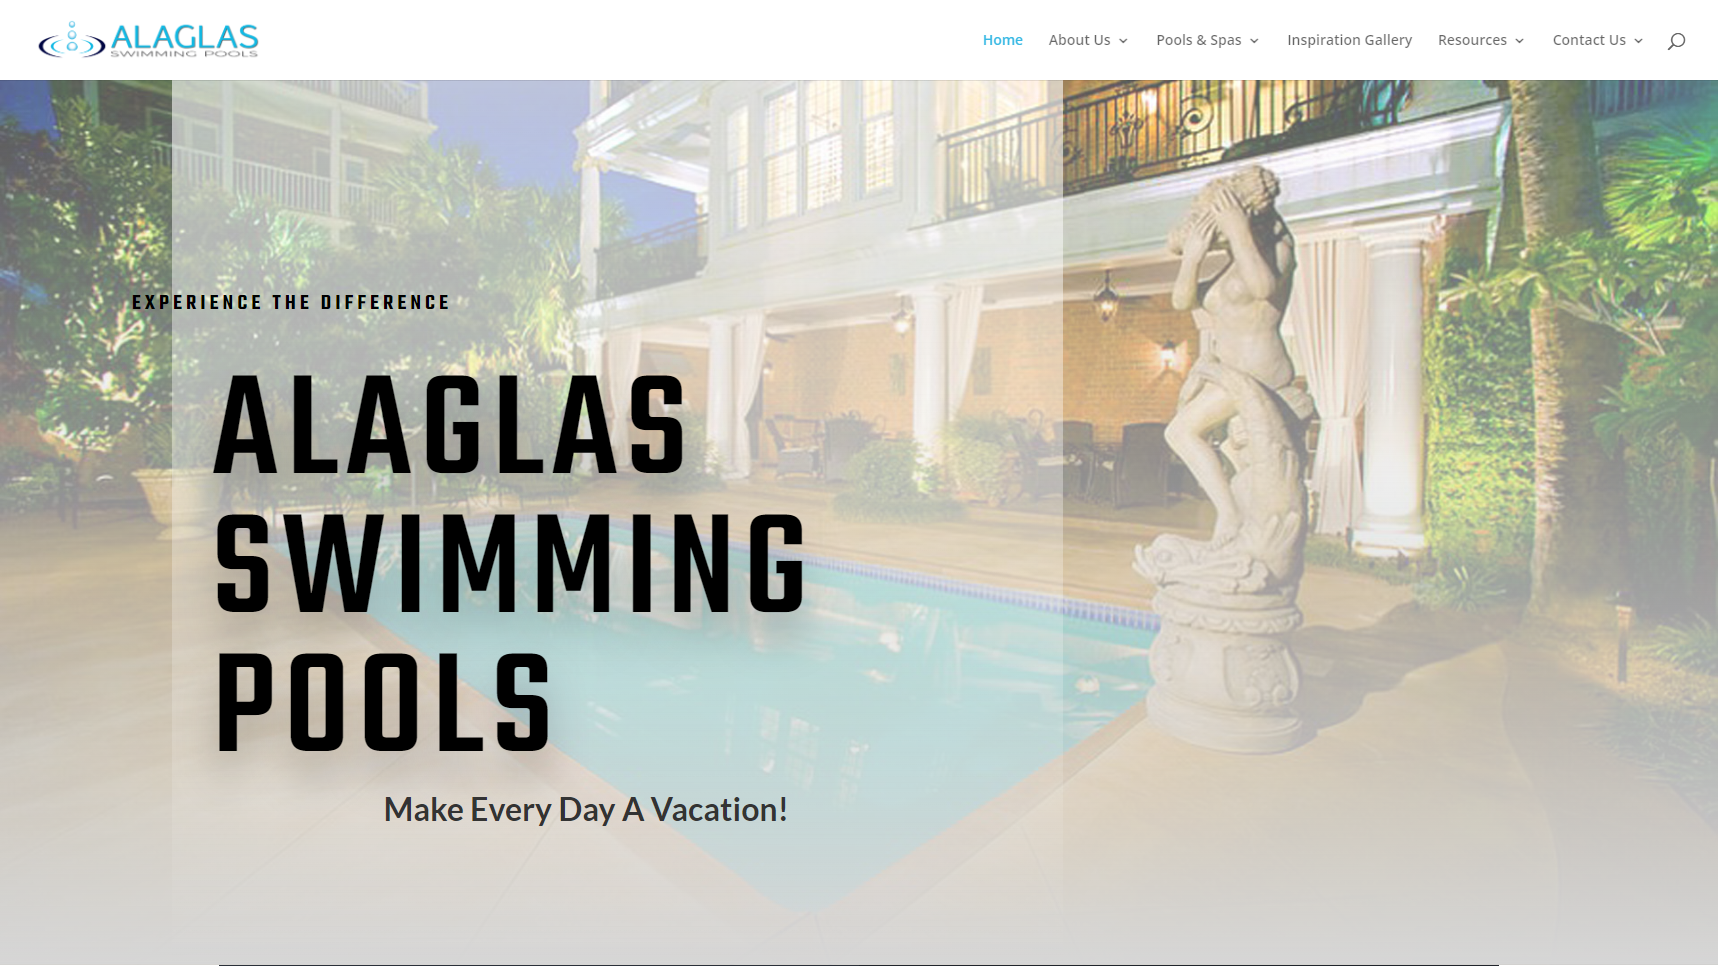 Alaglas Pools - Fiberglass Pool Manufacturer